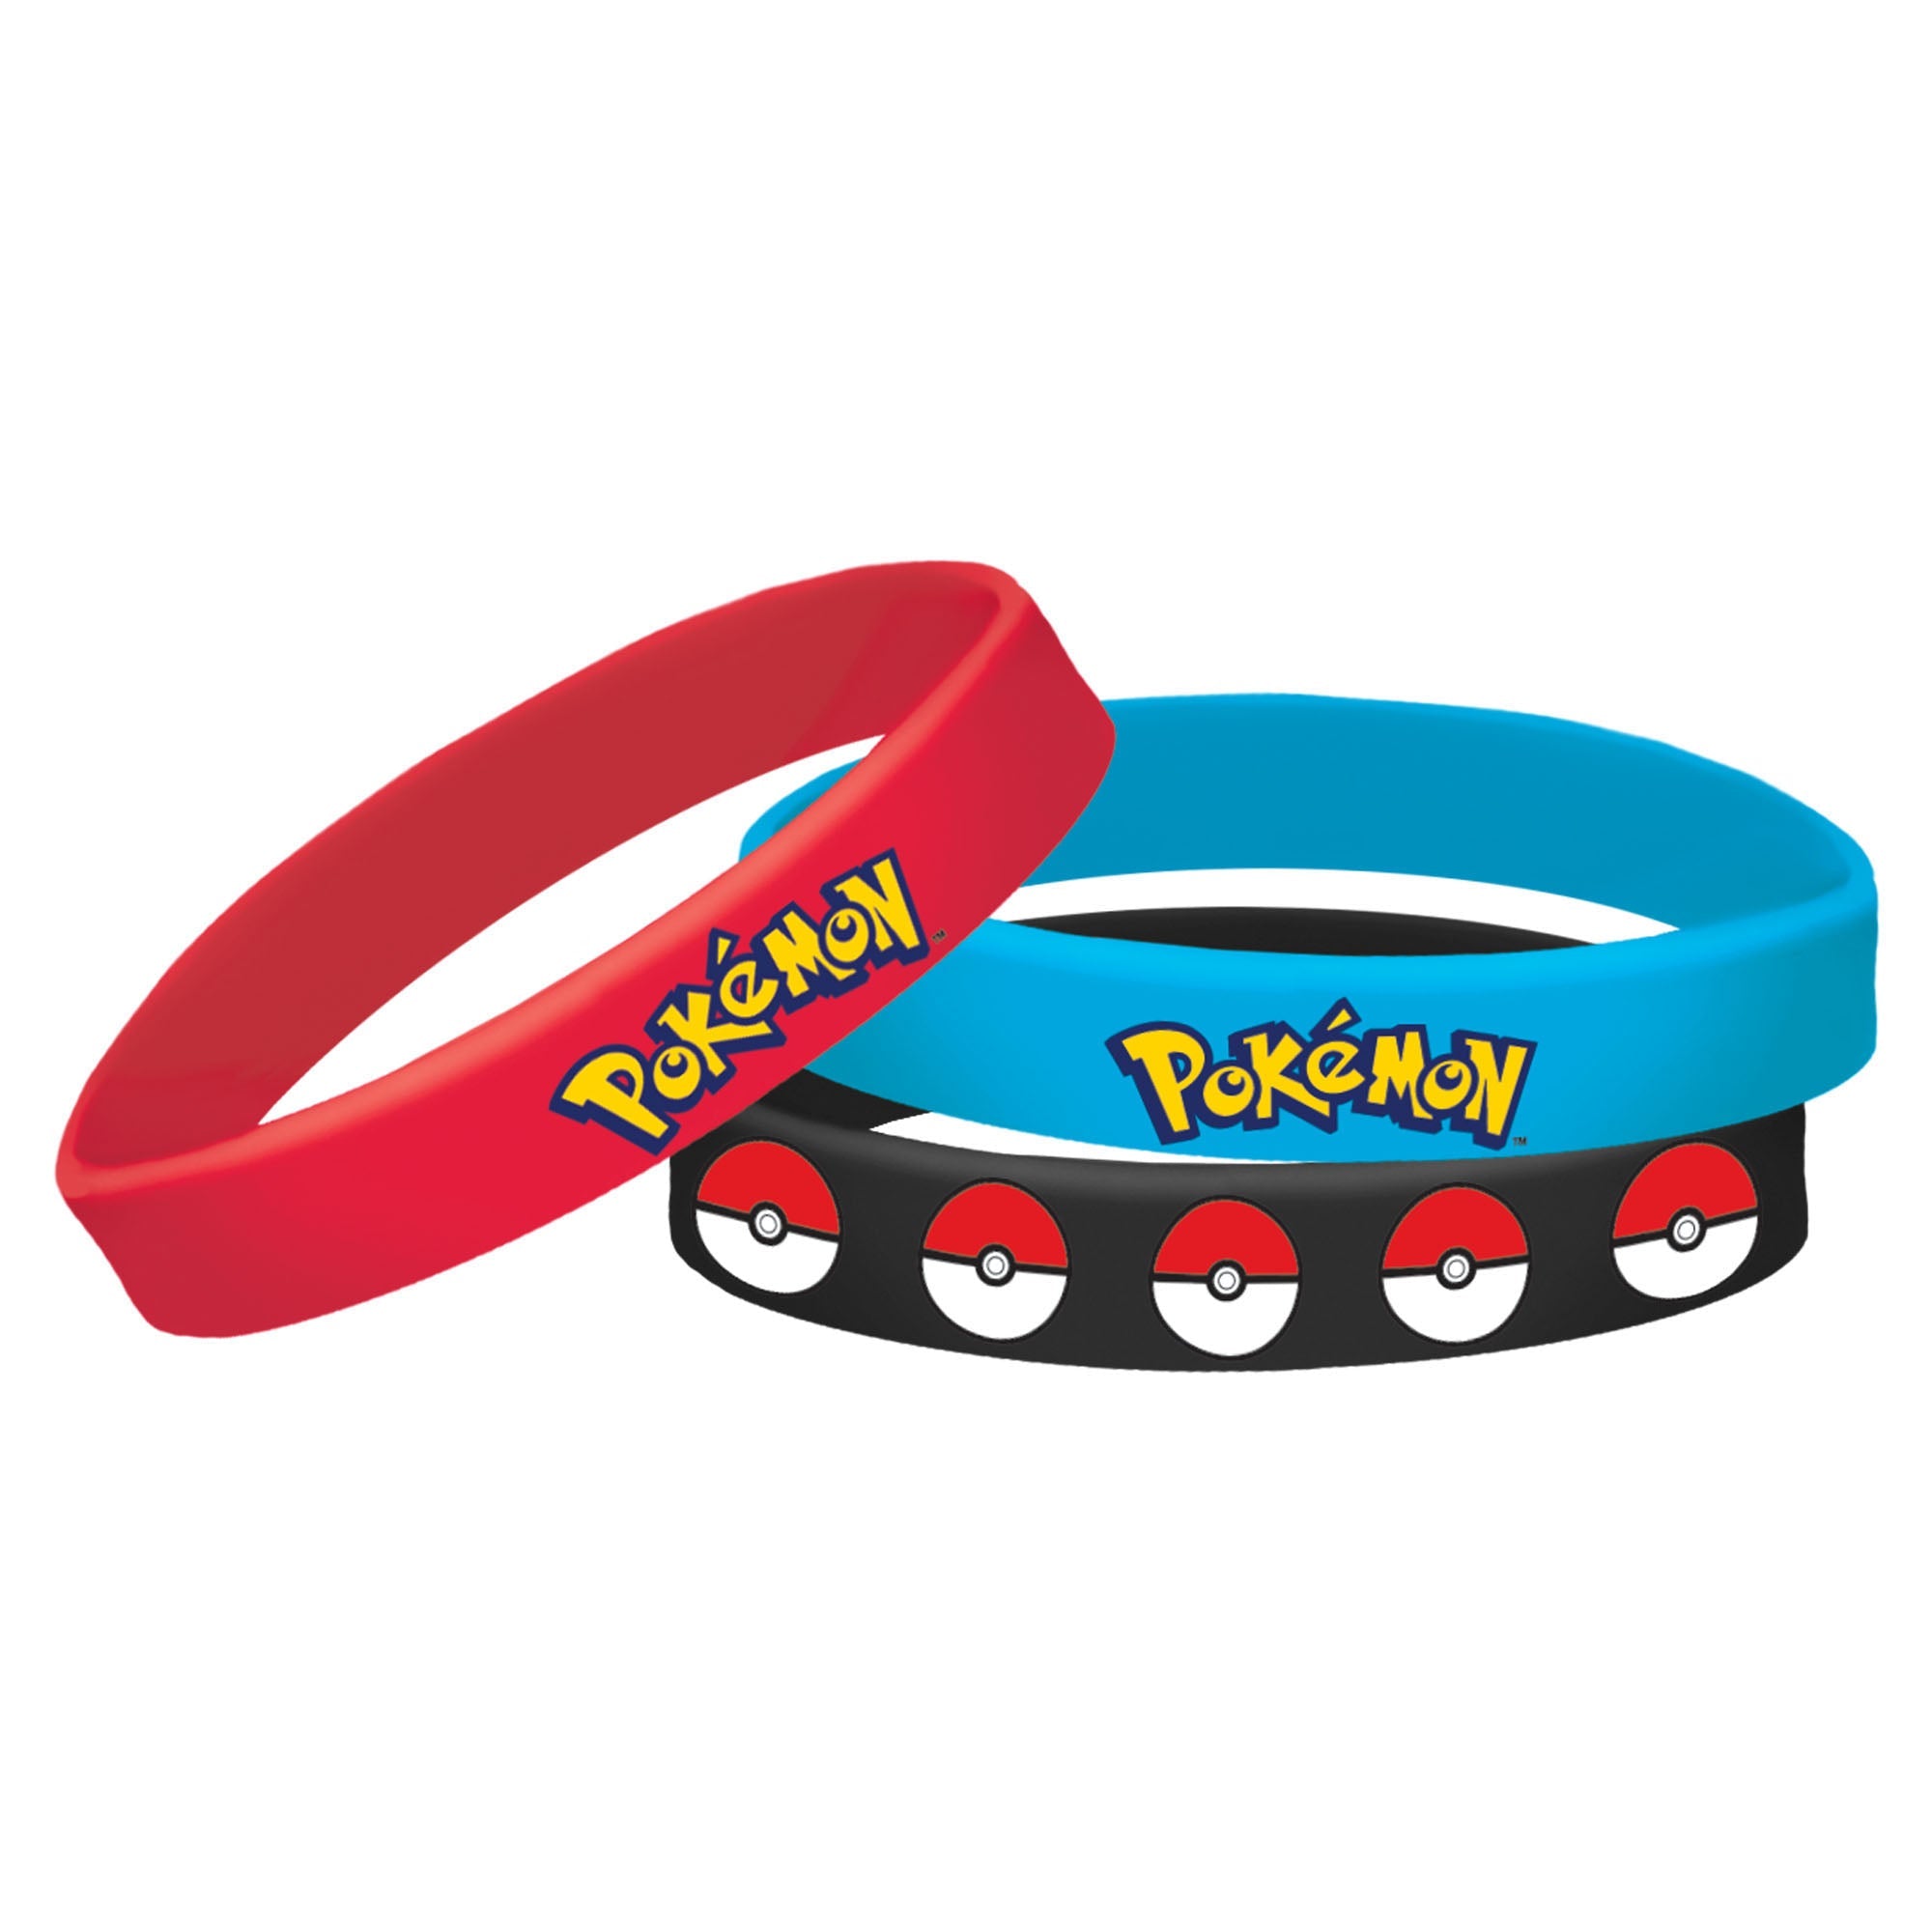 Pokemon Rubber Bracelets Party Favors Package of 6